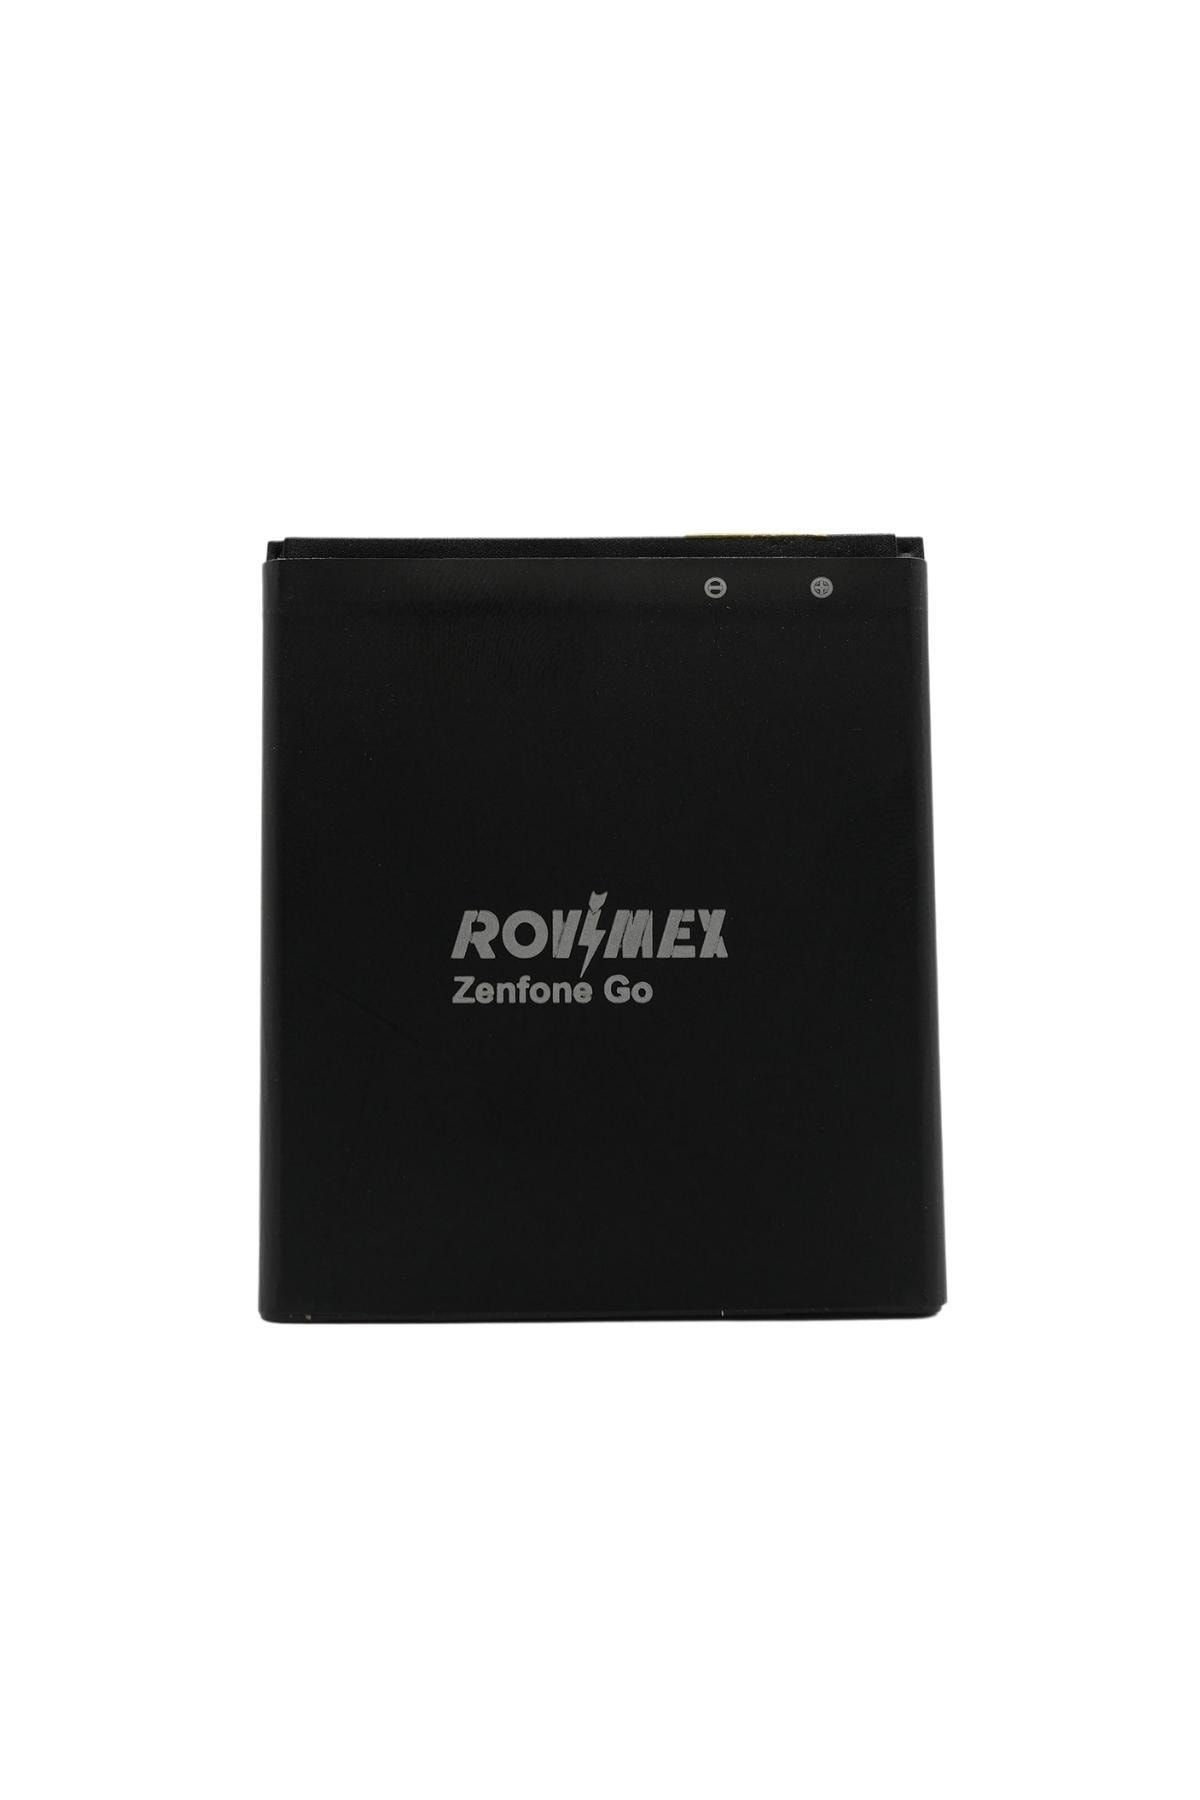 Rovimex Asus Zenfone Go Tv (zb551kl) Batarya Pil